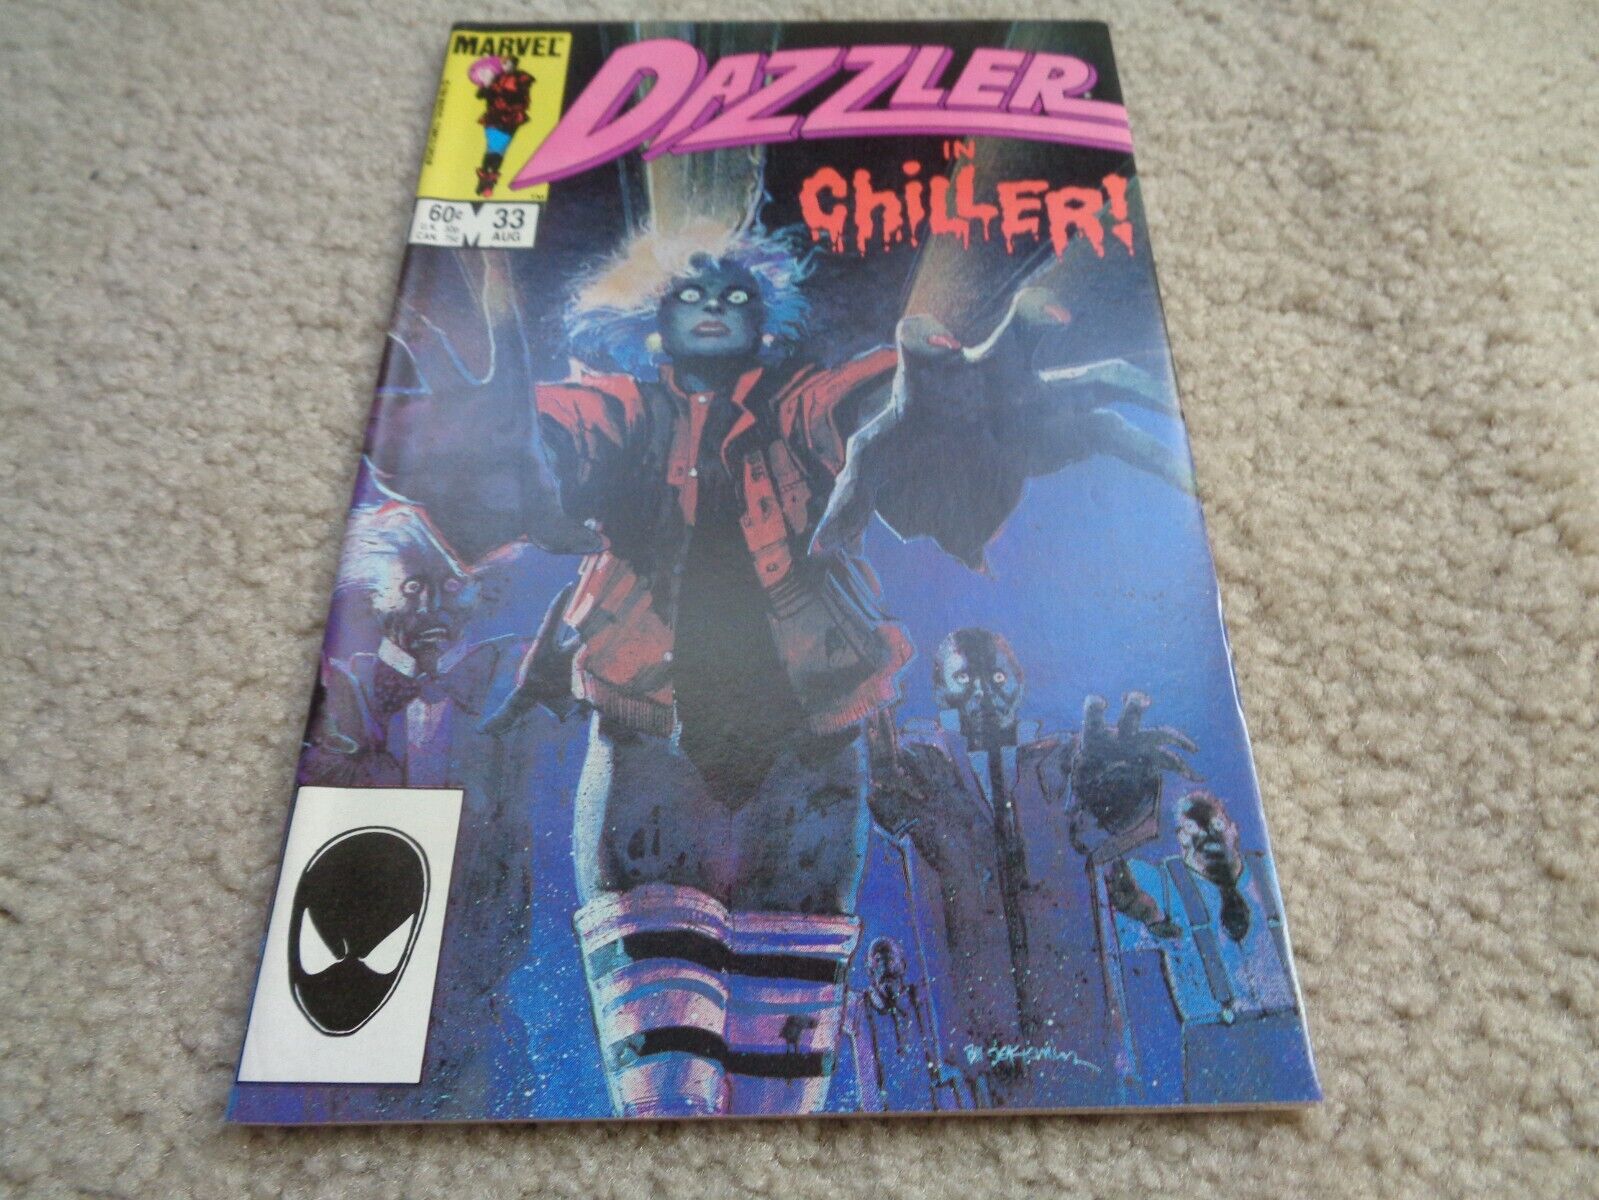 Dazzler #33 COMIC BOOK 1984 MICHAEL JACKSON THRILLER HOMAGE COVER HOT KEY